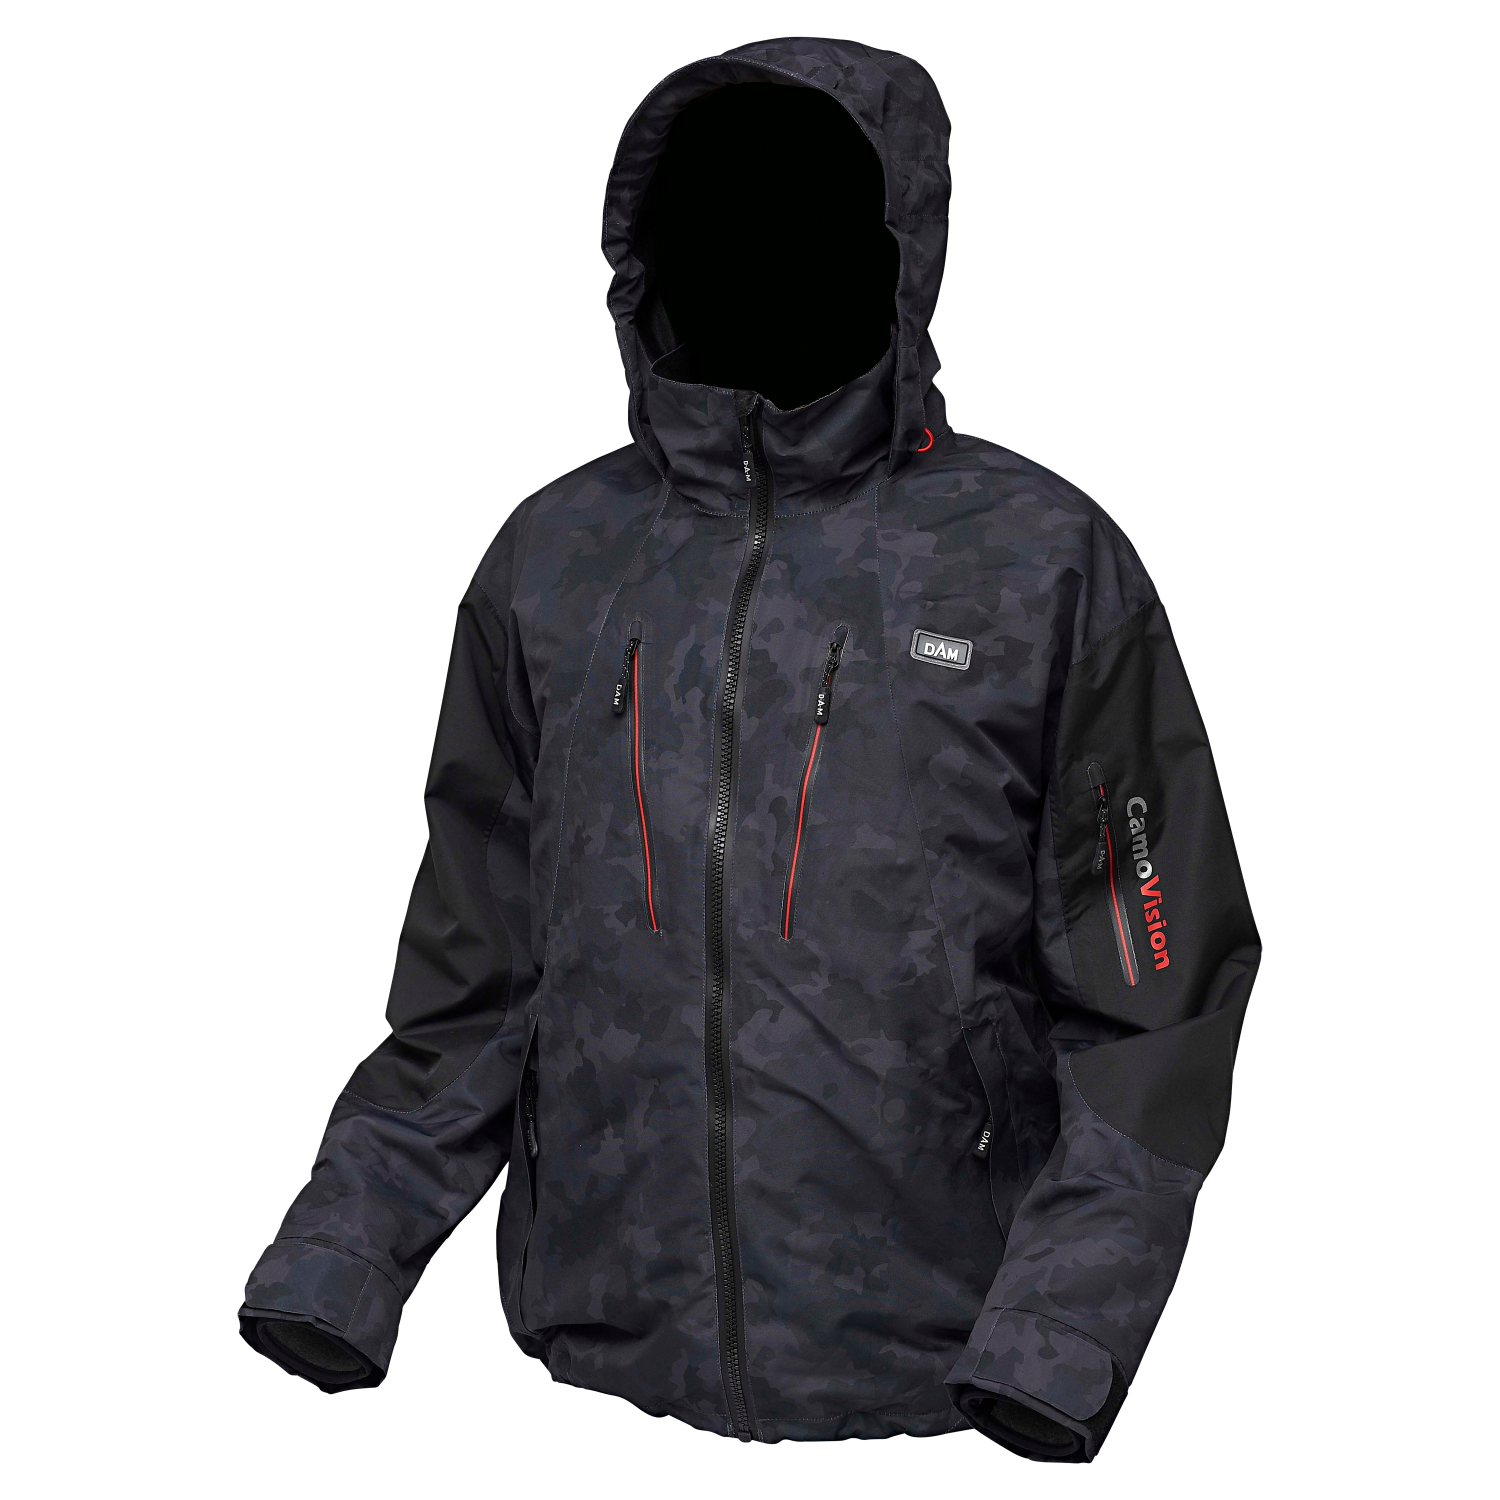 https://images.askari-sport.com/en/product/1/large/dam-mens-outdoor-jacket-camovision-jacket.jpg